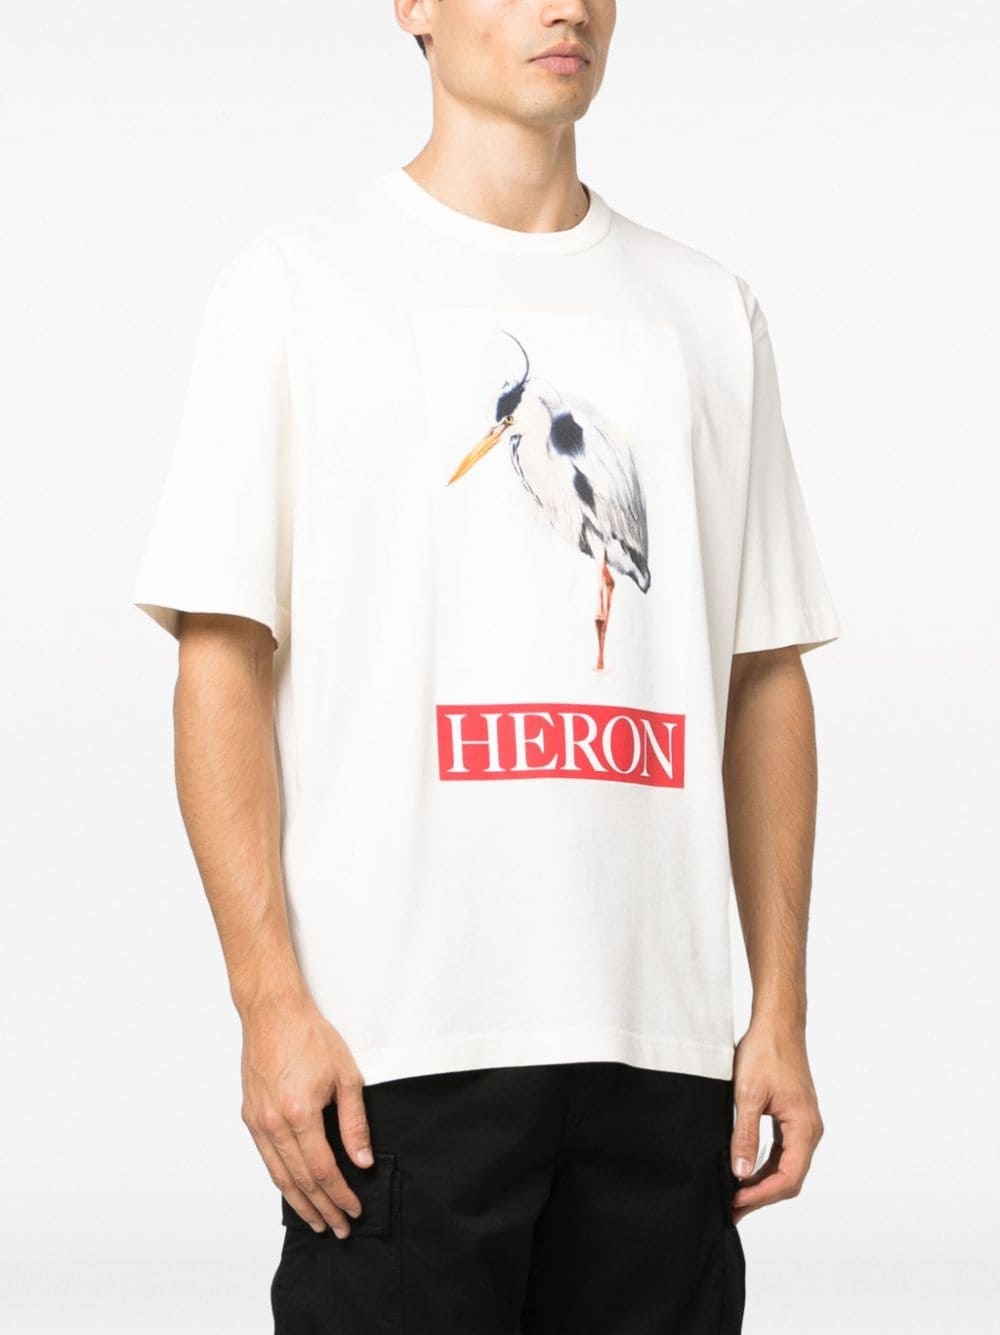 Heron Bird Painted cotton T-shirt - 3